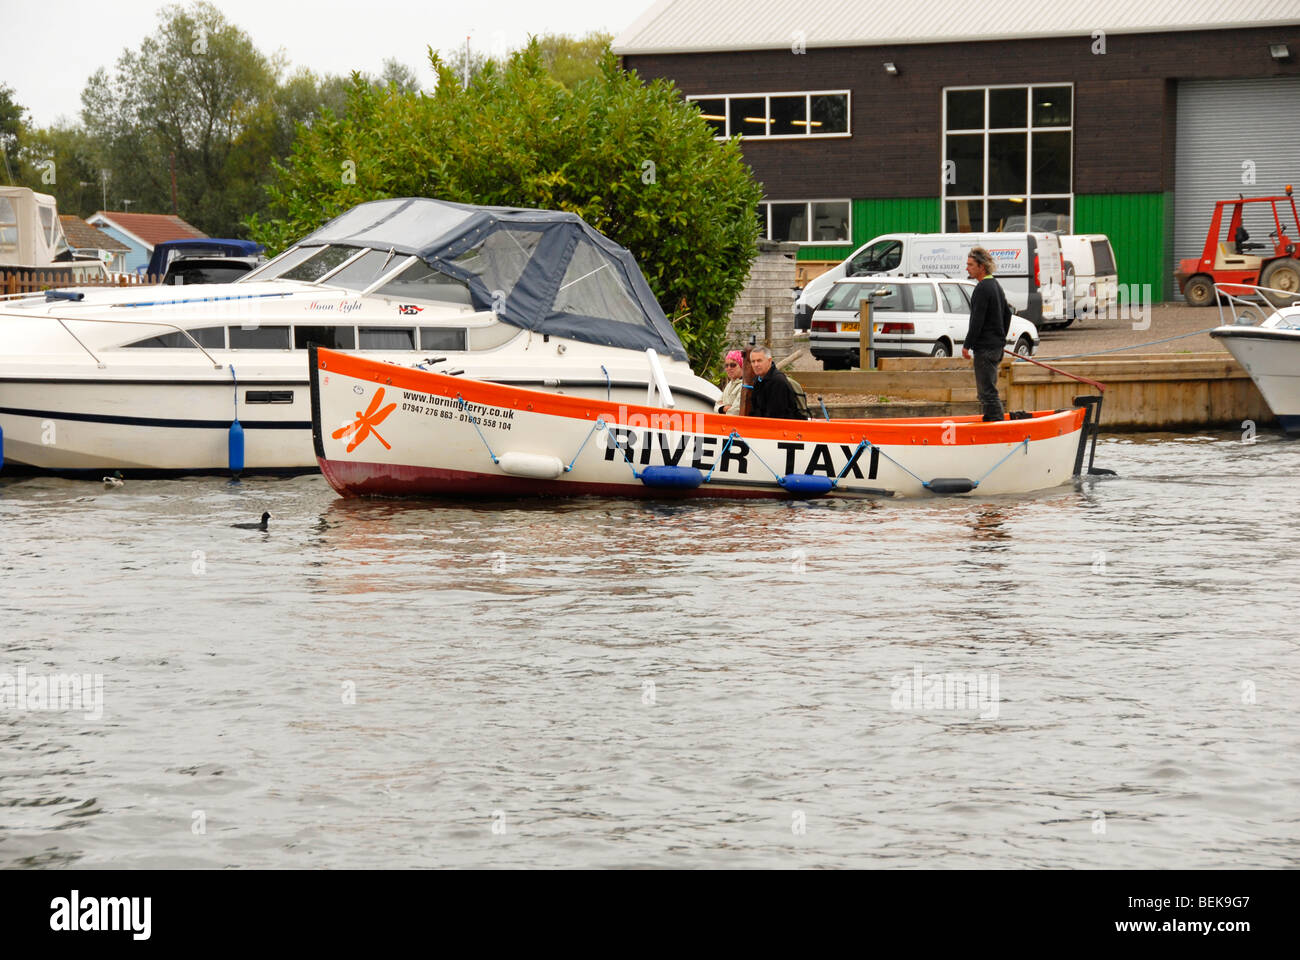 Pequeño lanzamiento abierto que actúa como taxi de río, Horning, Norfolk, Inglaterra Foto de stock